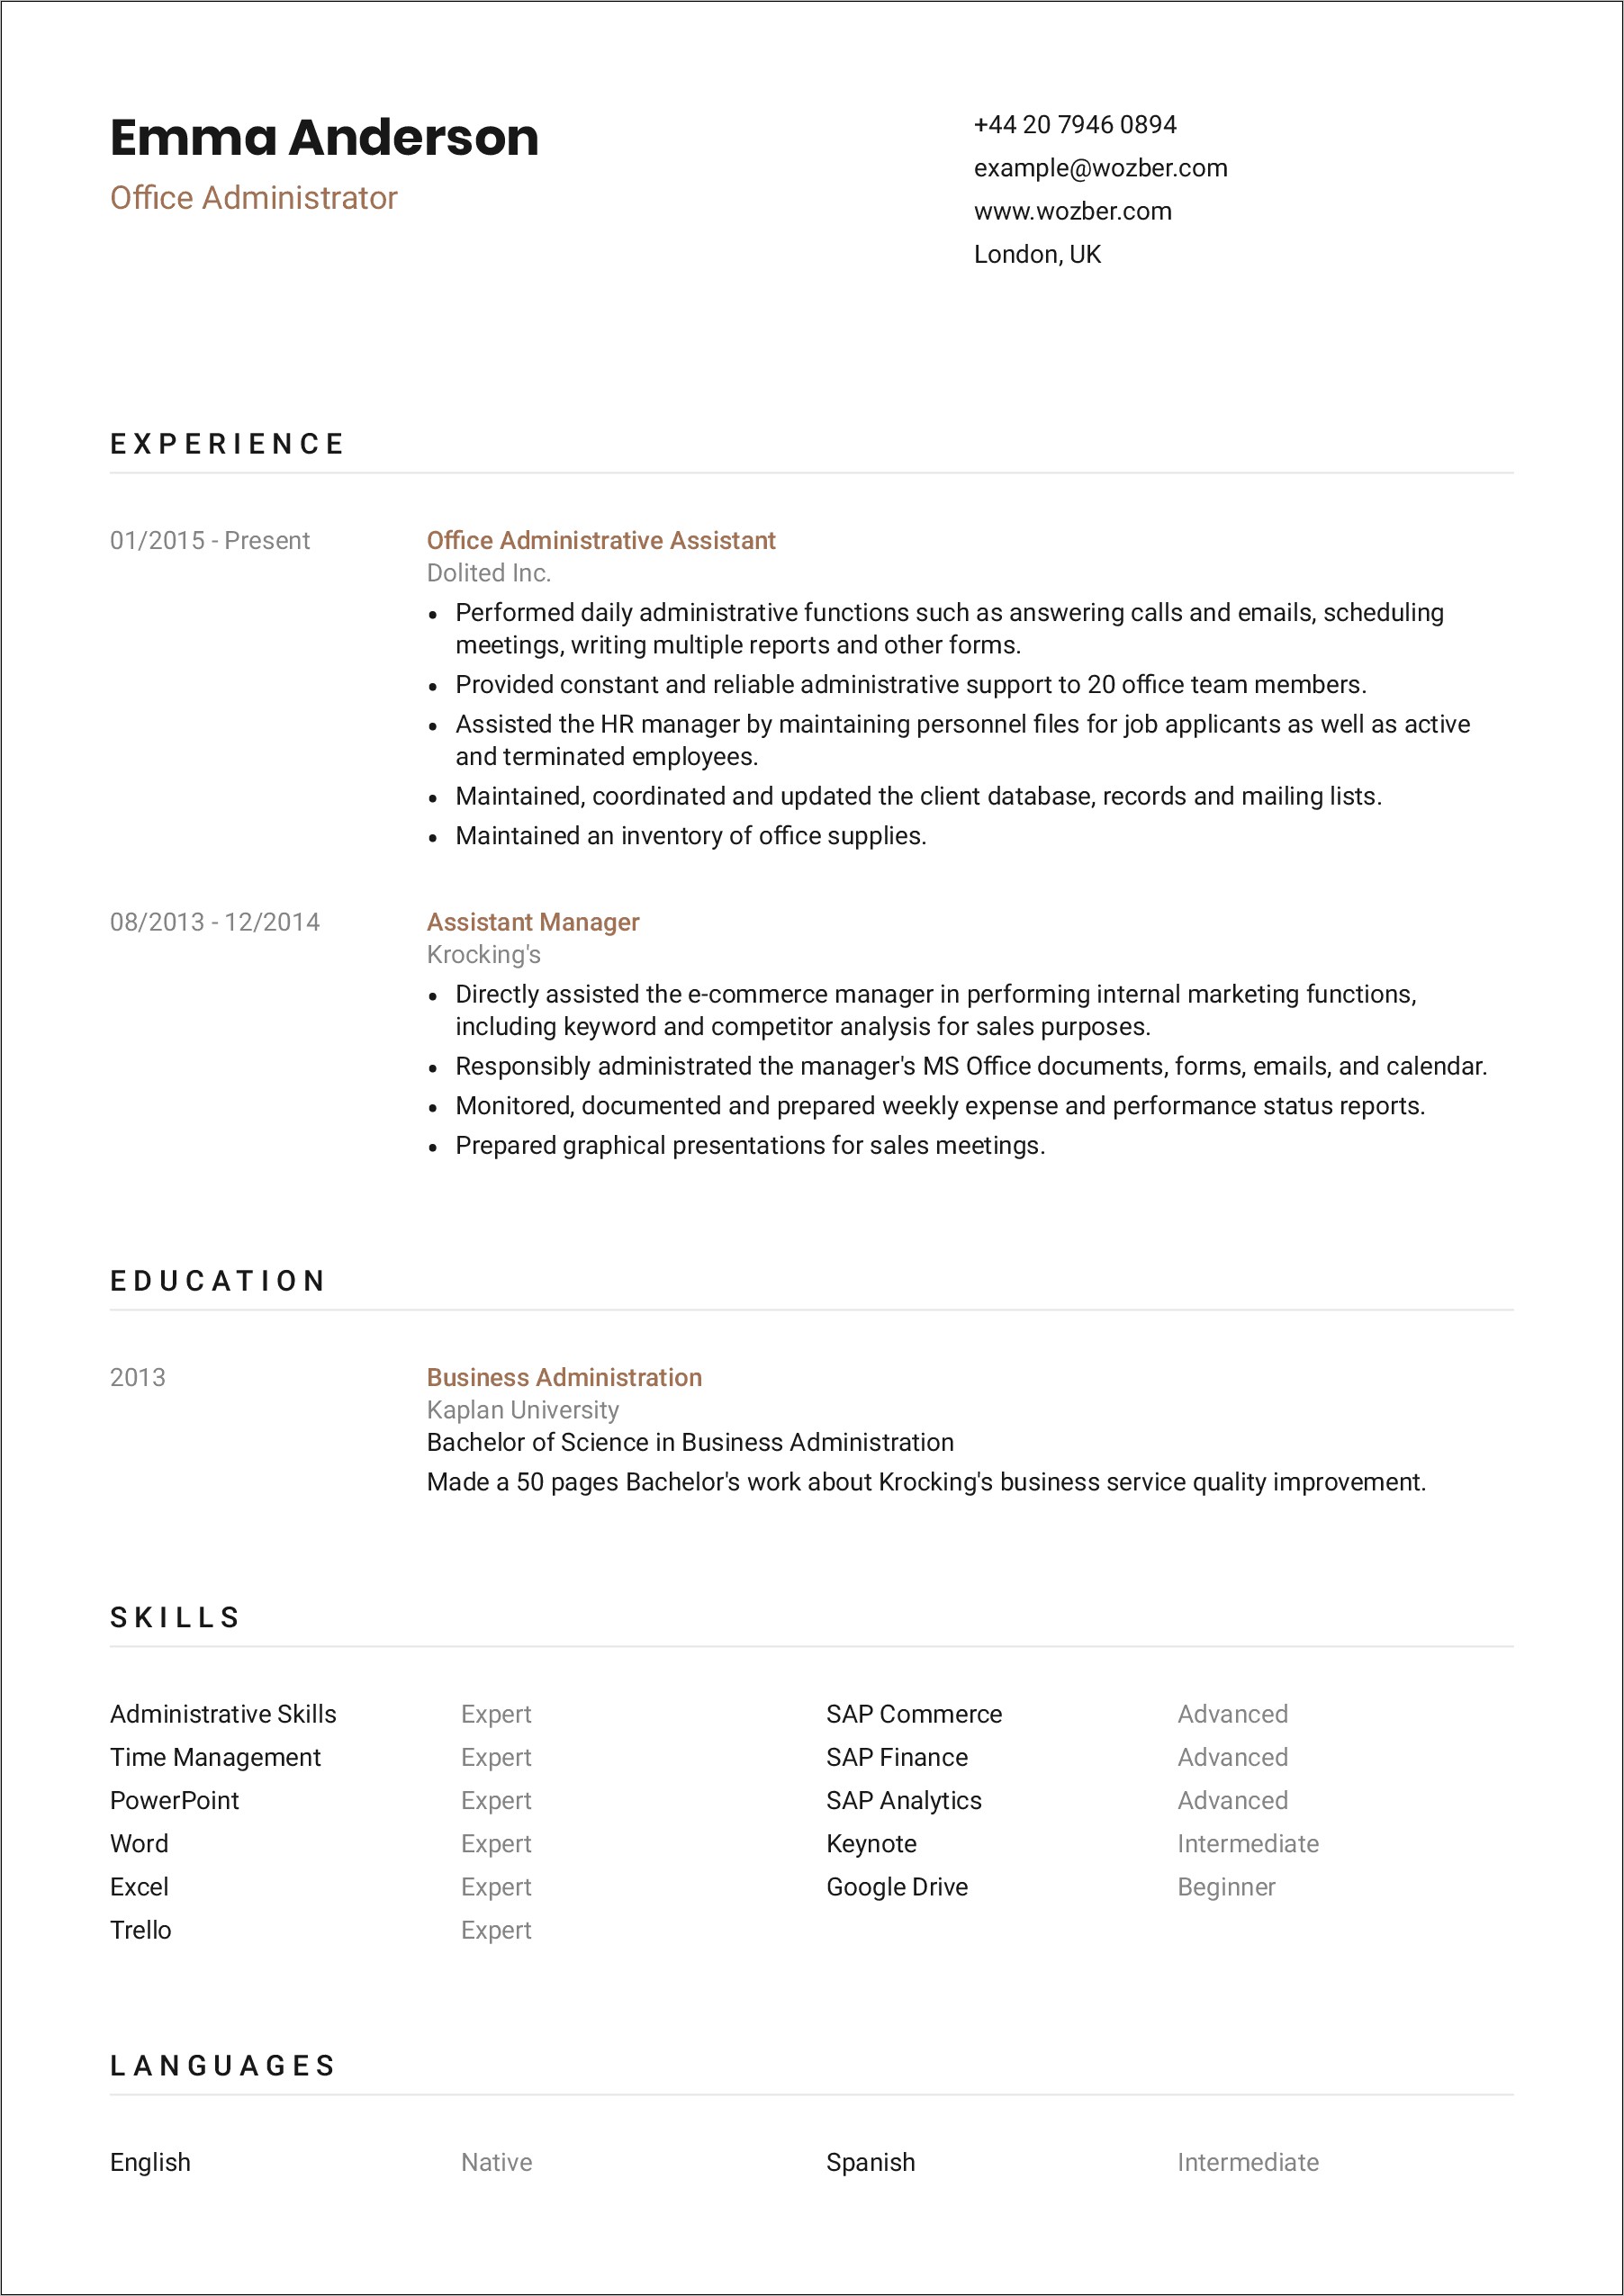 Resume Description For Office Manager